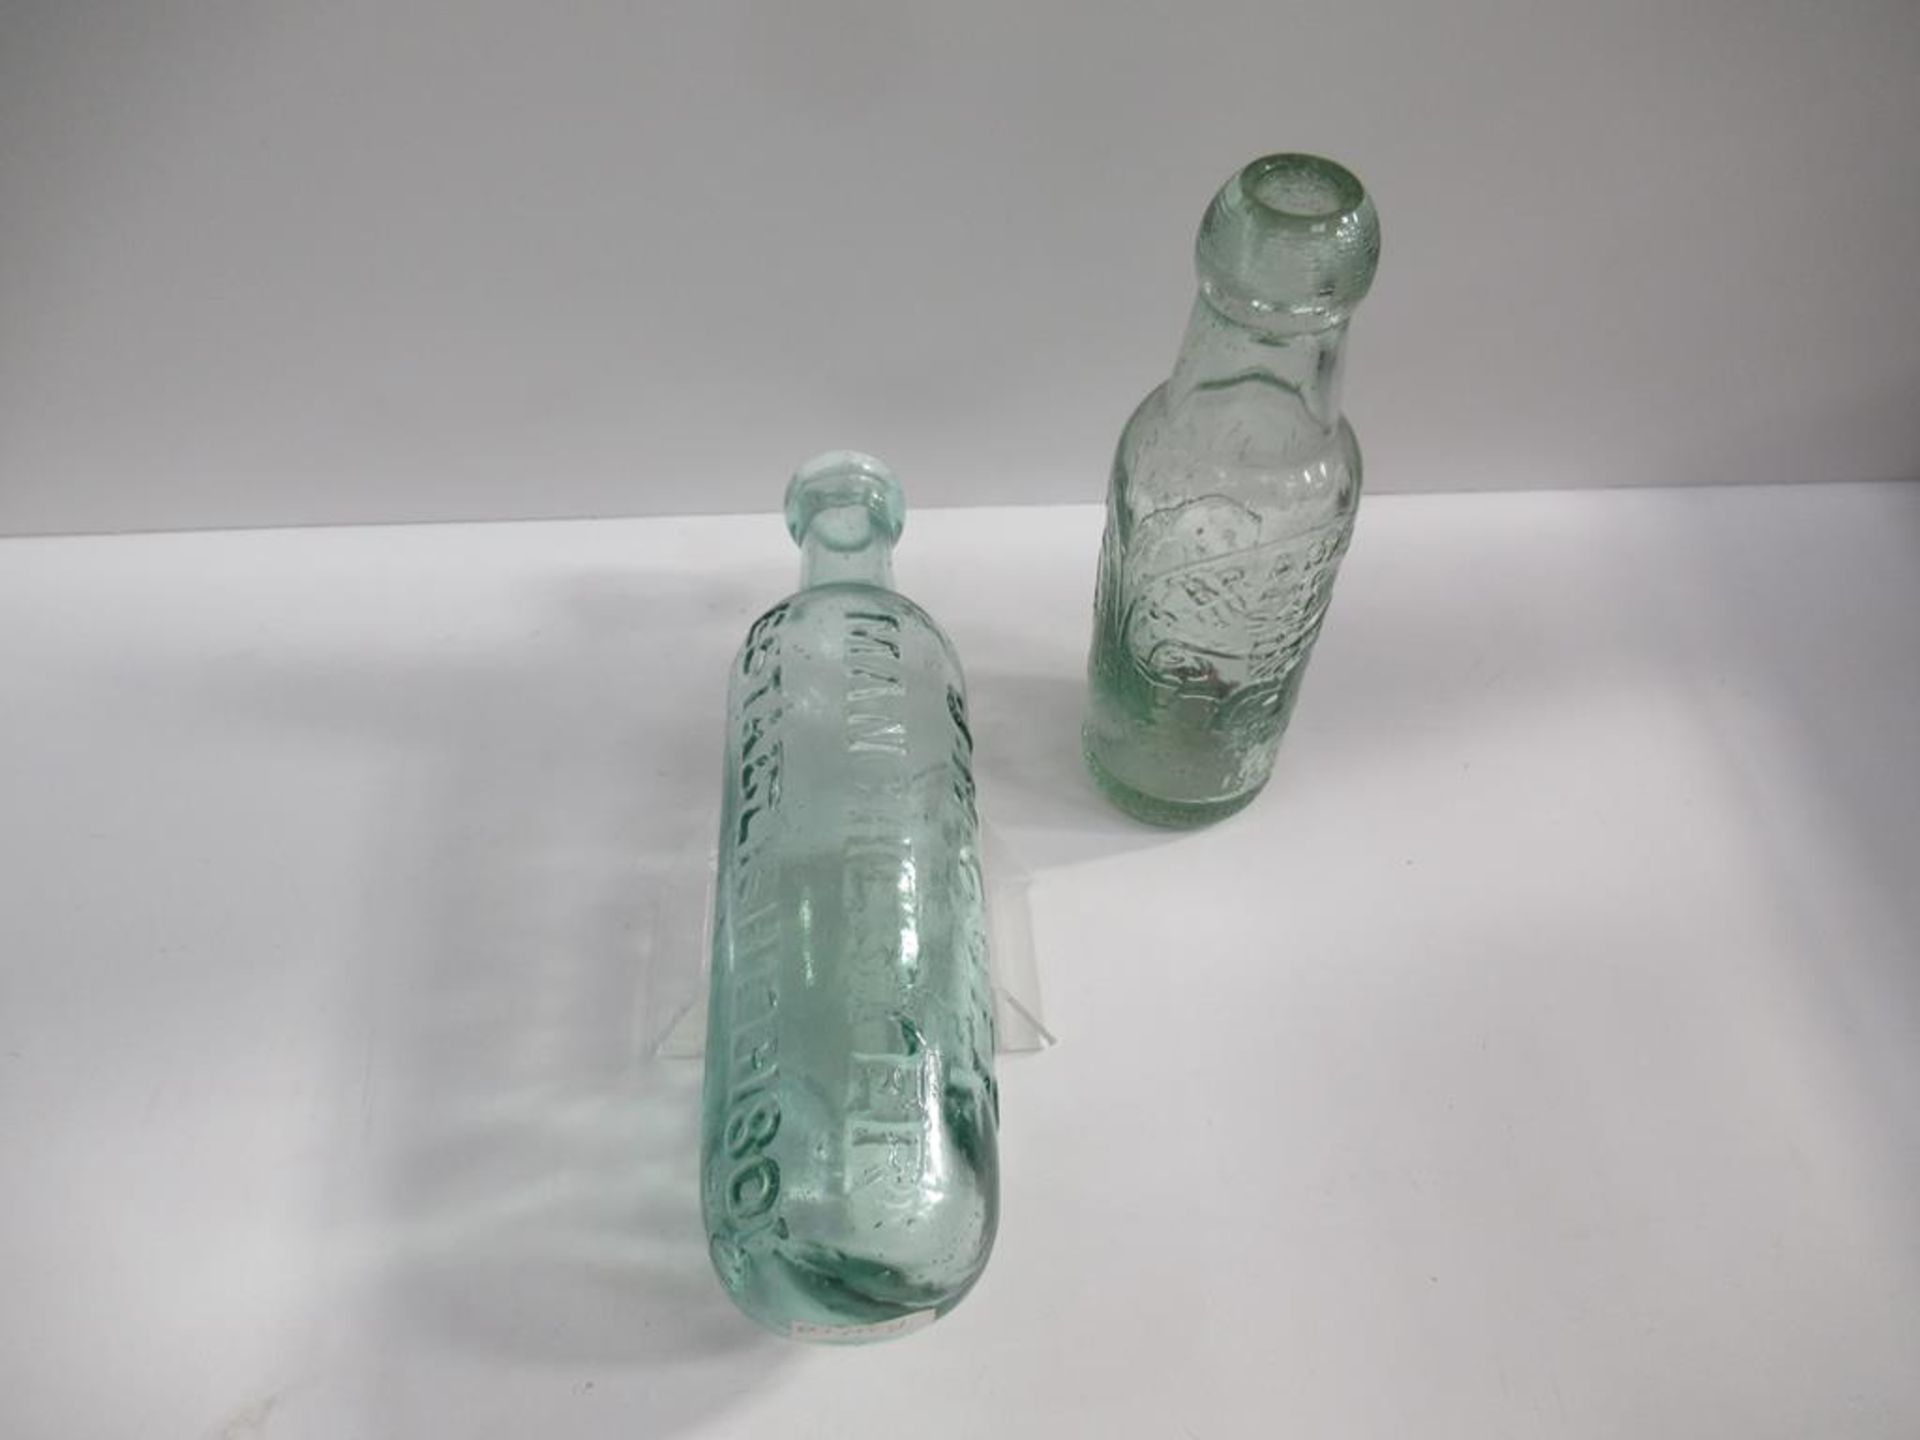 Manchester J.H.Cuff rounded bottom bottle with S.Bradbury & Son bottle